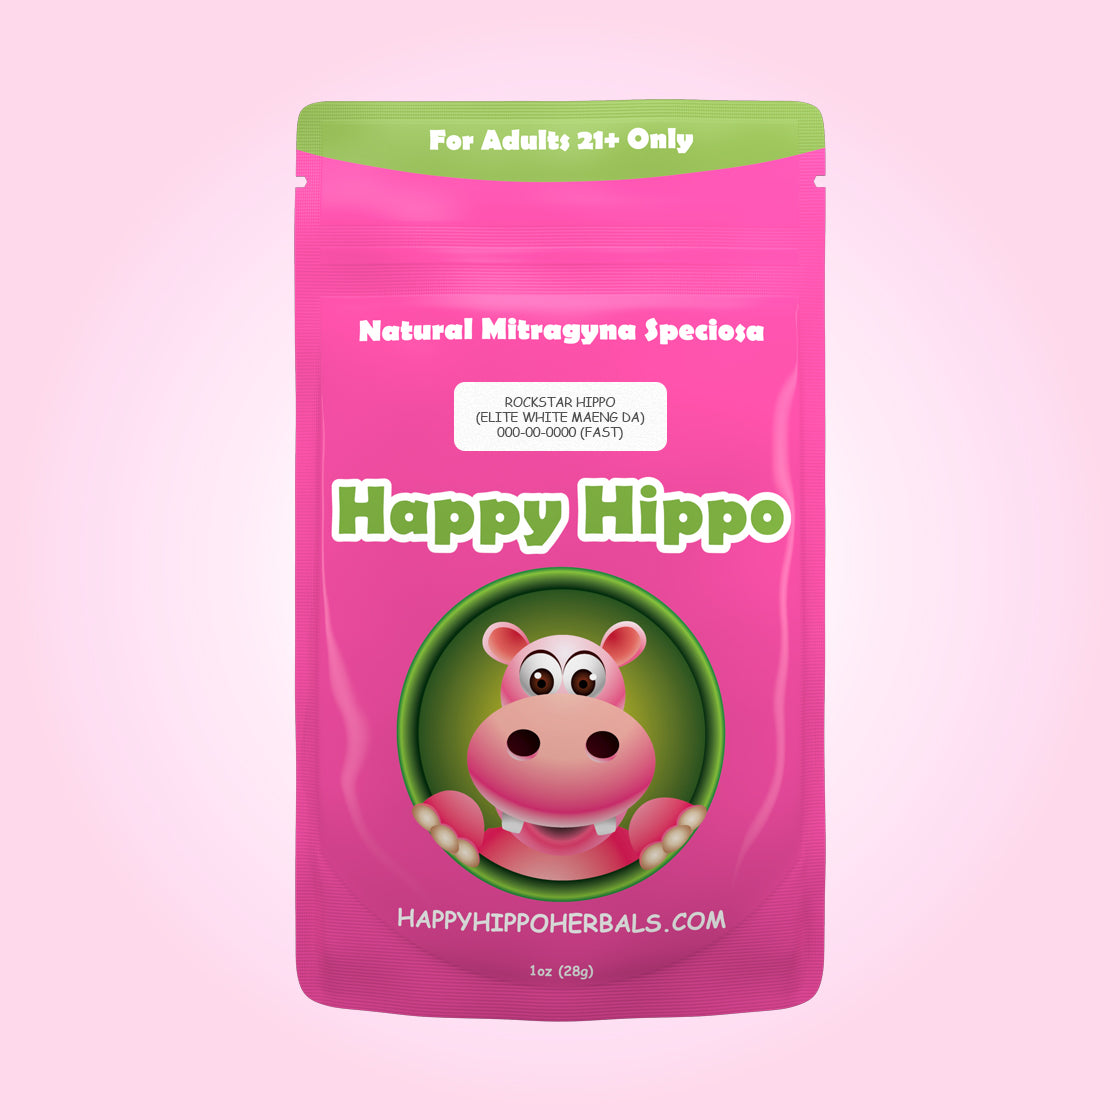 Product Image depicting a 1oz bag of Happy Hippo White Vein Maeng Da Kratom Powder (Mitragyna Speciosa).